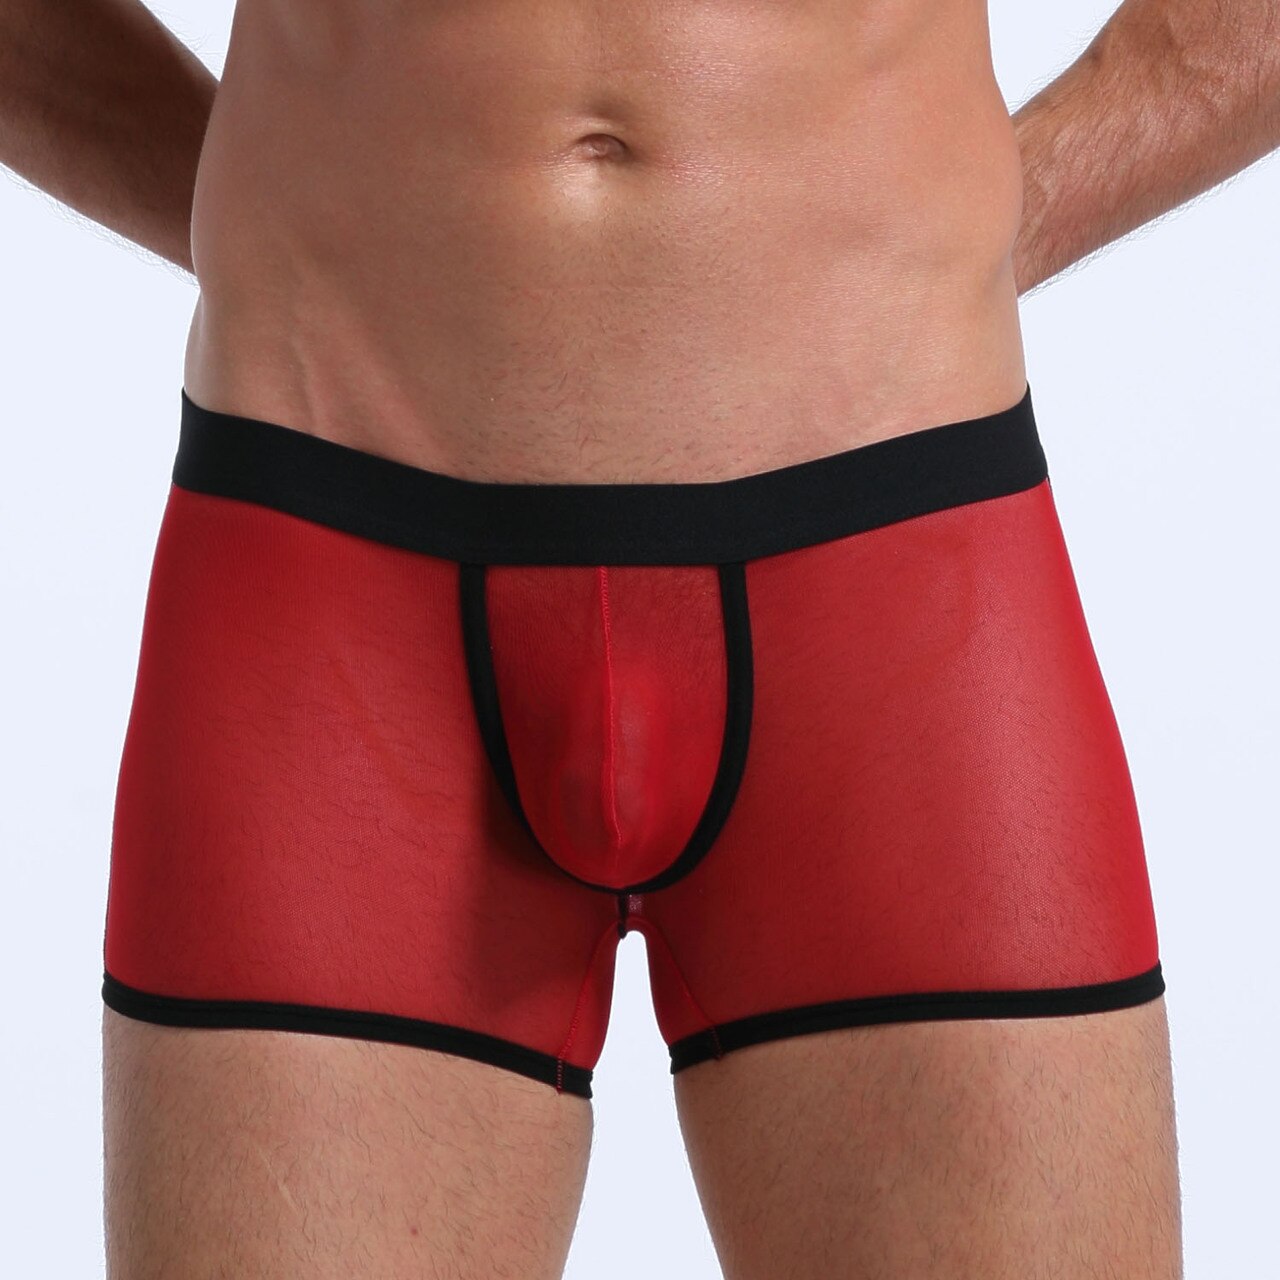 Underpants Mens Sexy Underwear Boxers Shorts Mesh Sheer Undies